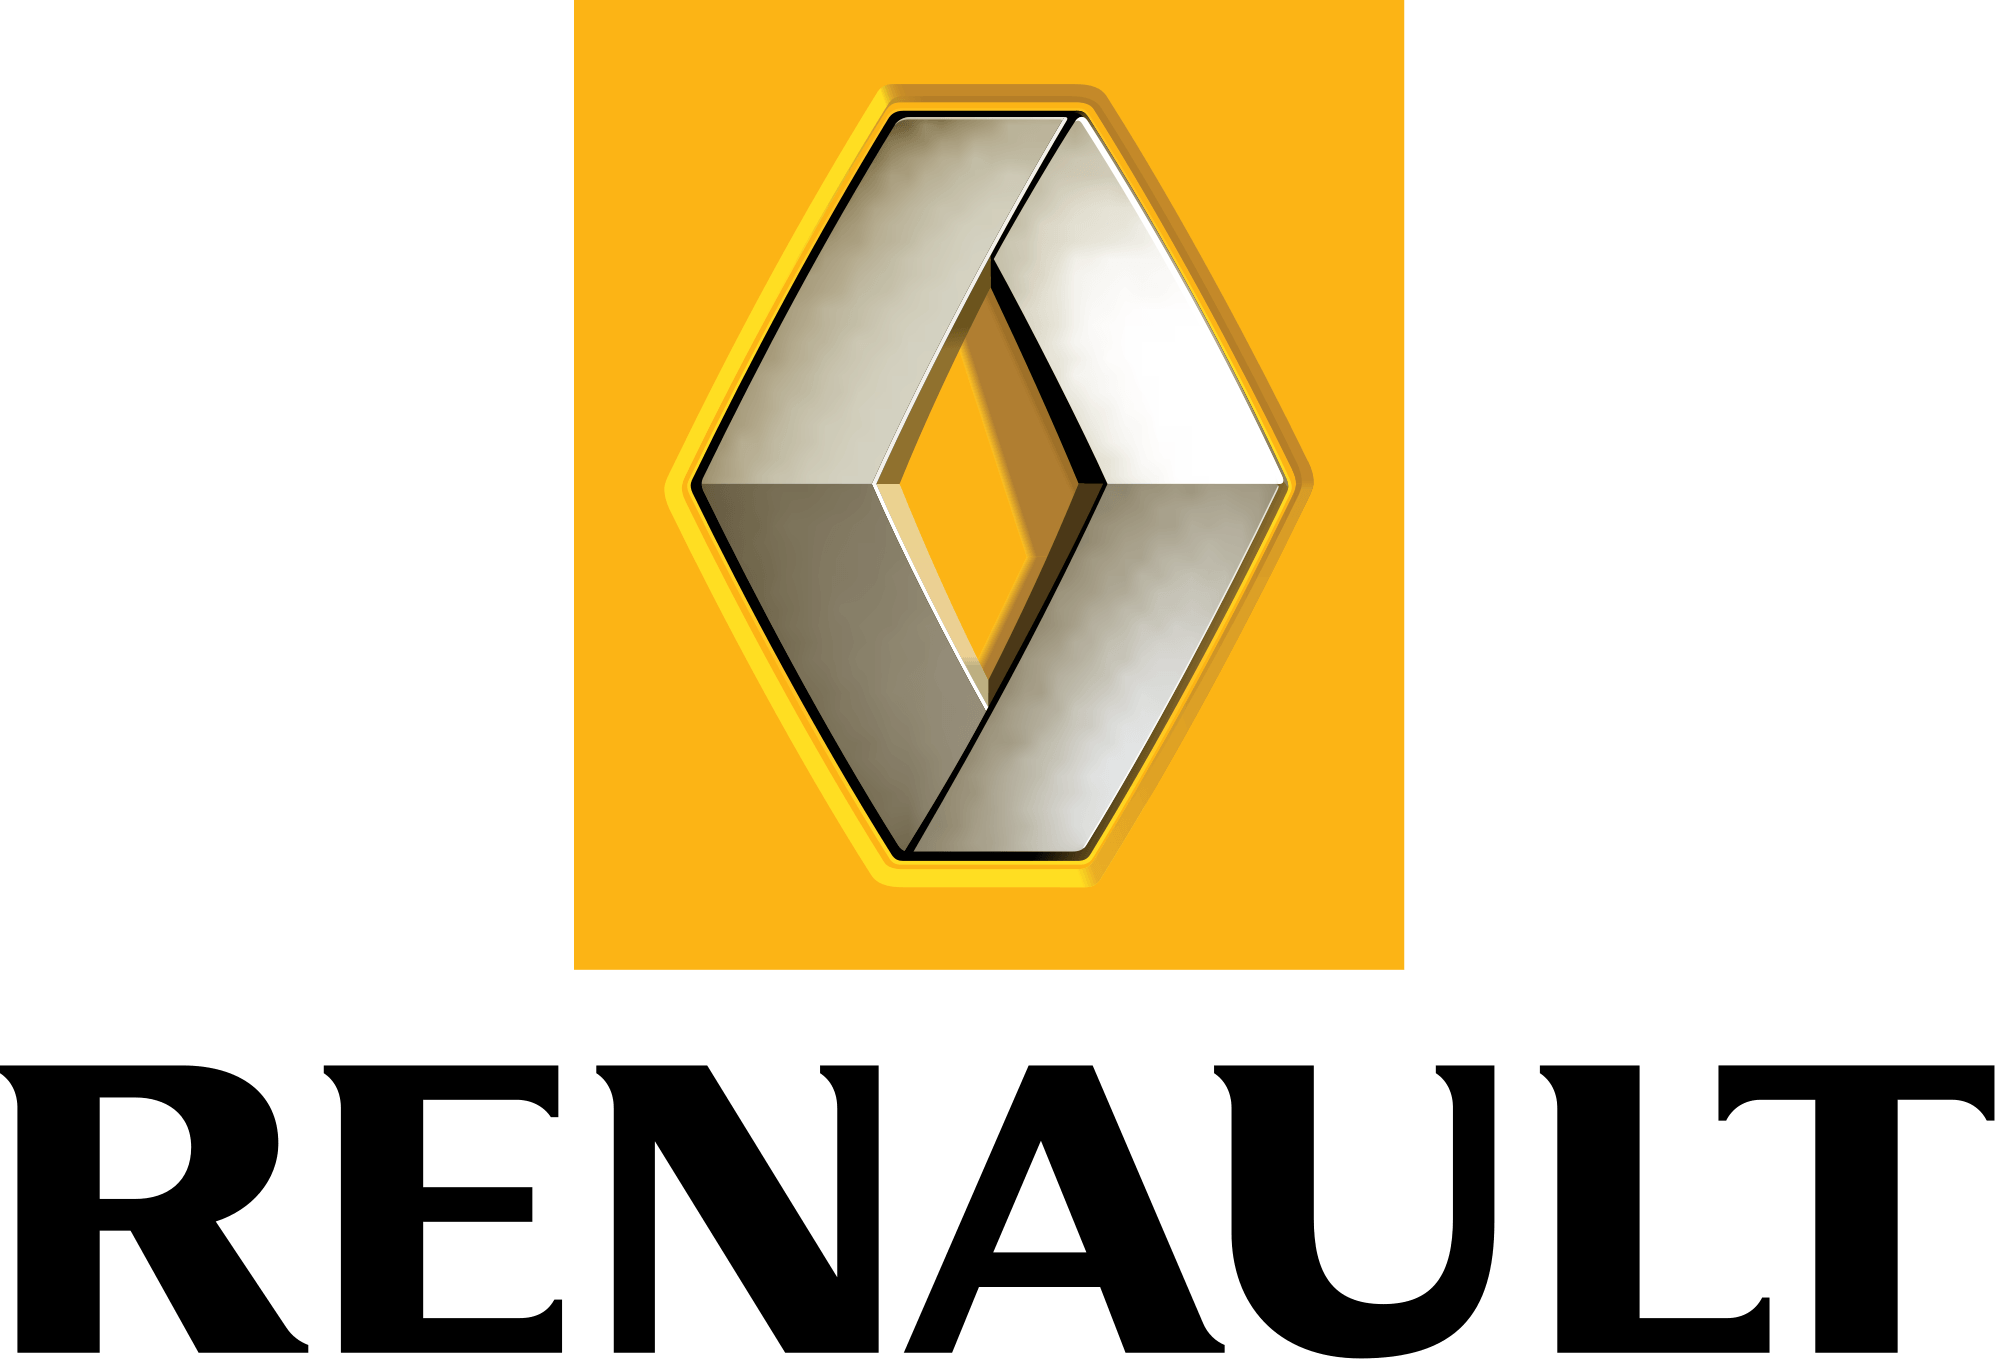 Diamond Car Company Logo - Renault Logo, Renault Car Symbol Meaning and History | Car Brand ...